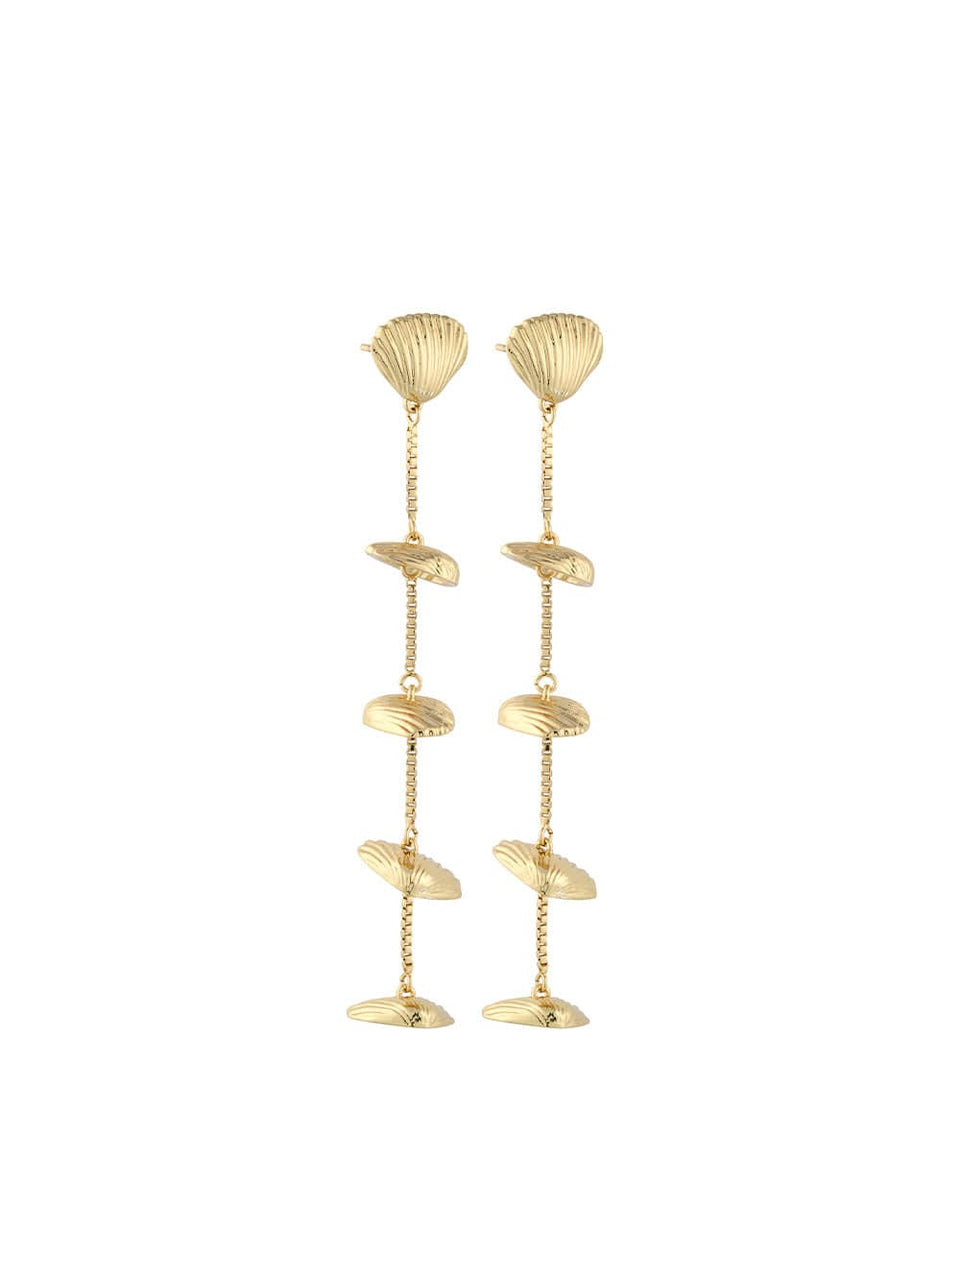 Thalassa Drop Earring KIVARI - Gold shell studs on gold chain studs